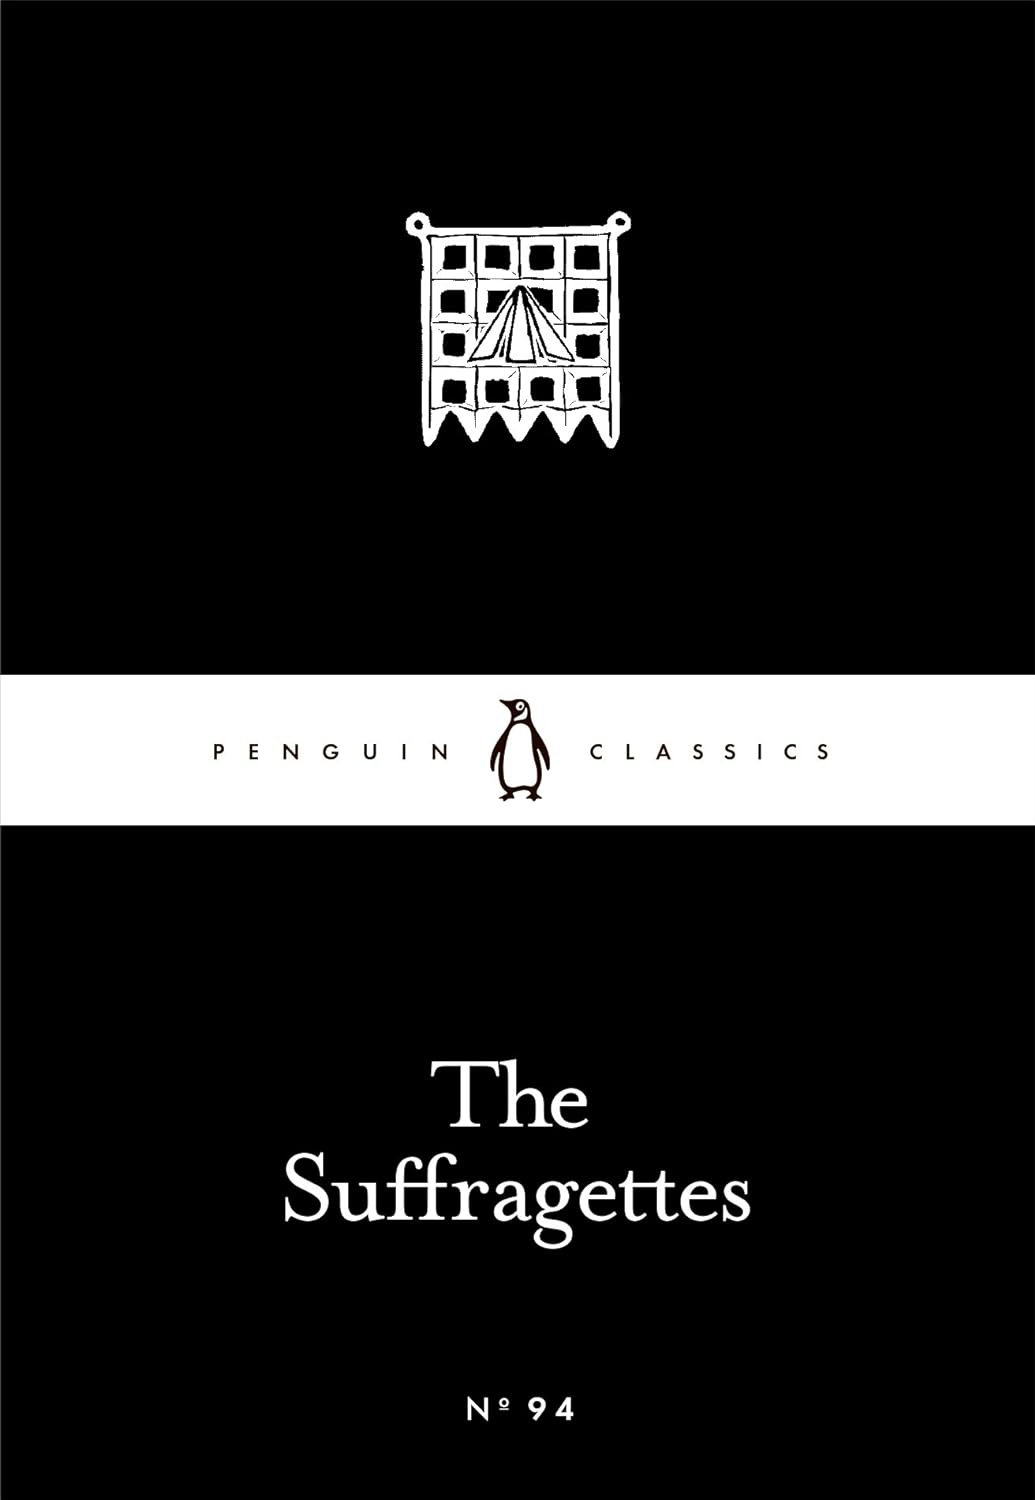 The Suffragettes by Emmeline Pankhurst